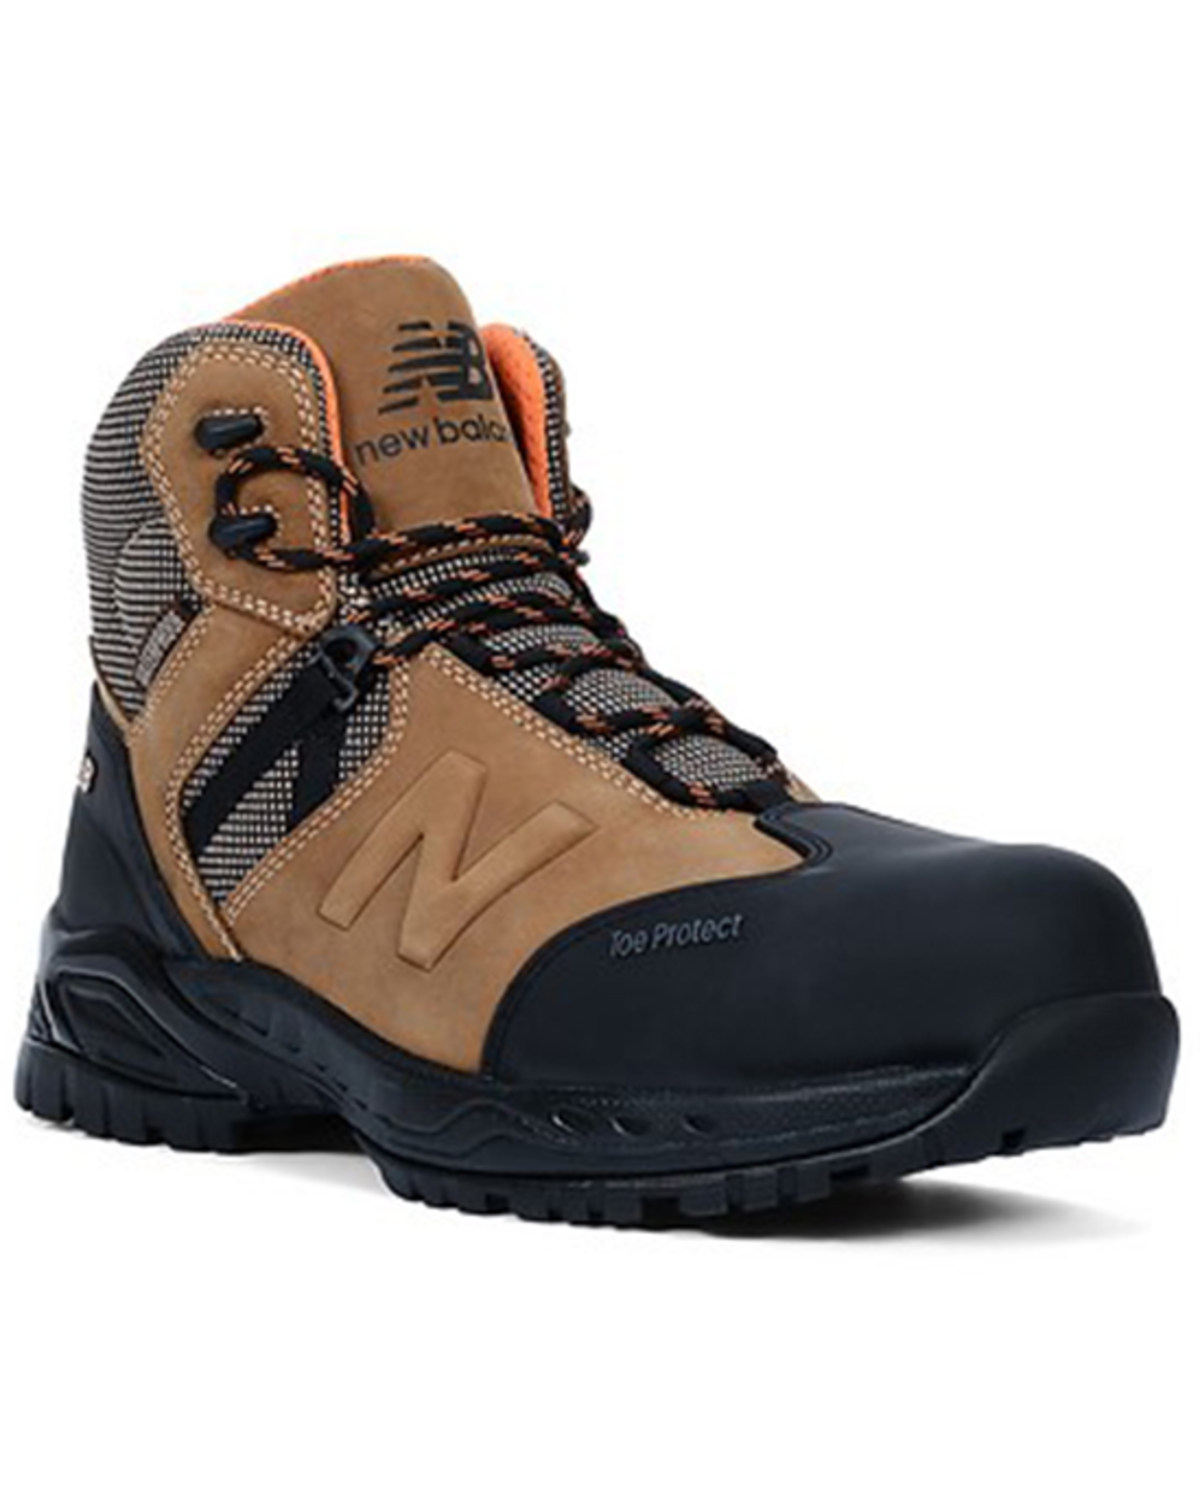 New Balance Men's Allsite Lace-Up Waterproof Work Boots - Composite Toe